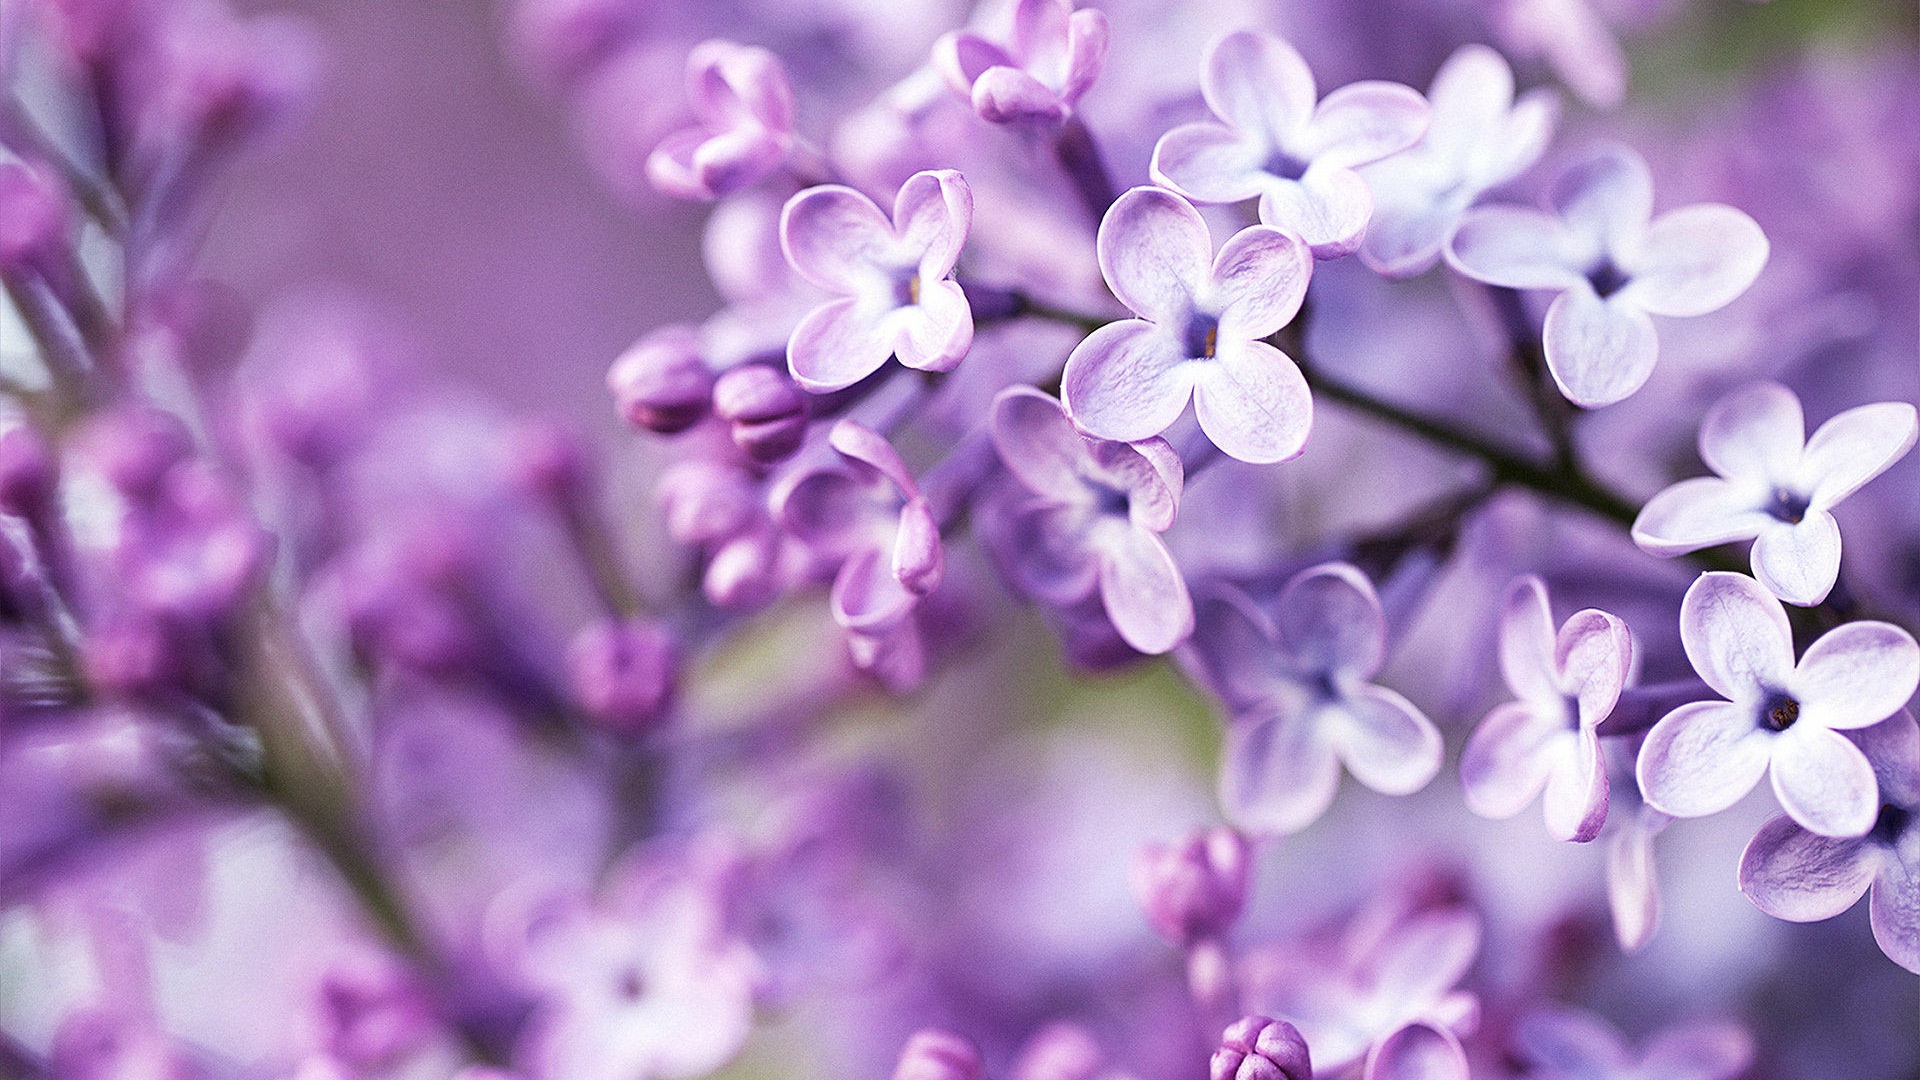 Lilac bloom purple blurry background Wallpaper Desktop Wallpapers